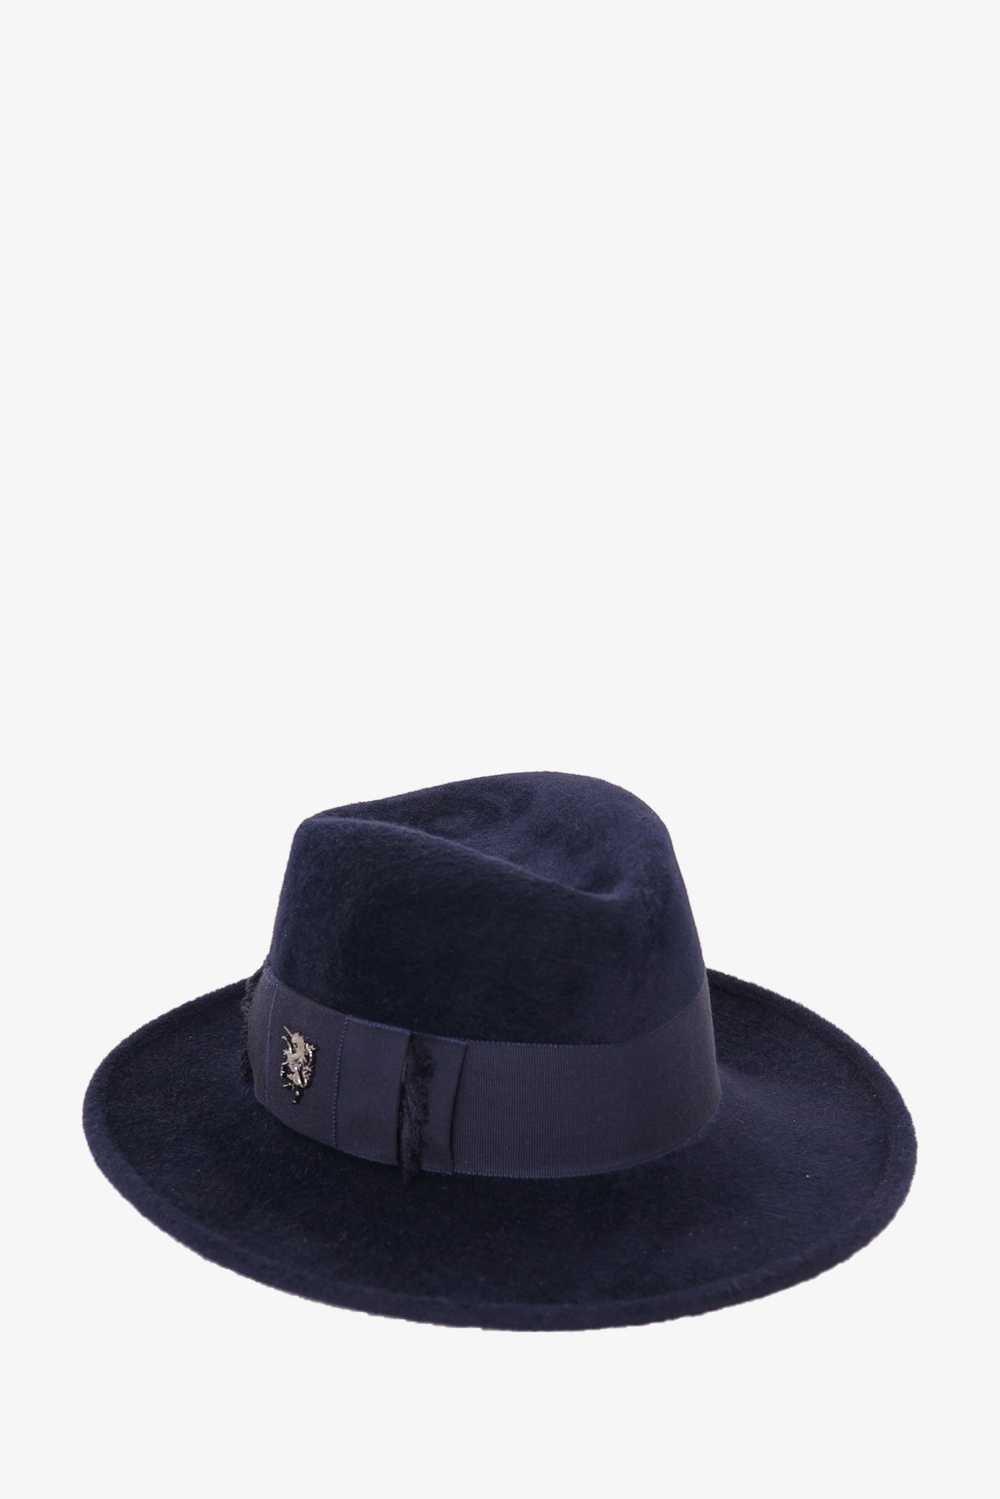 Philip Treacy Navy Wool Felt Bucket Hat - image 4